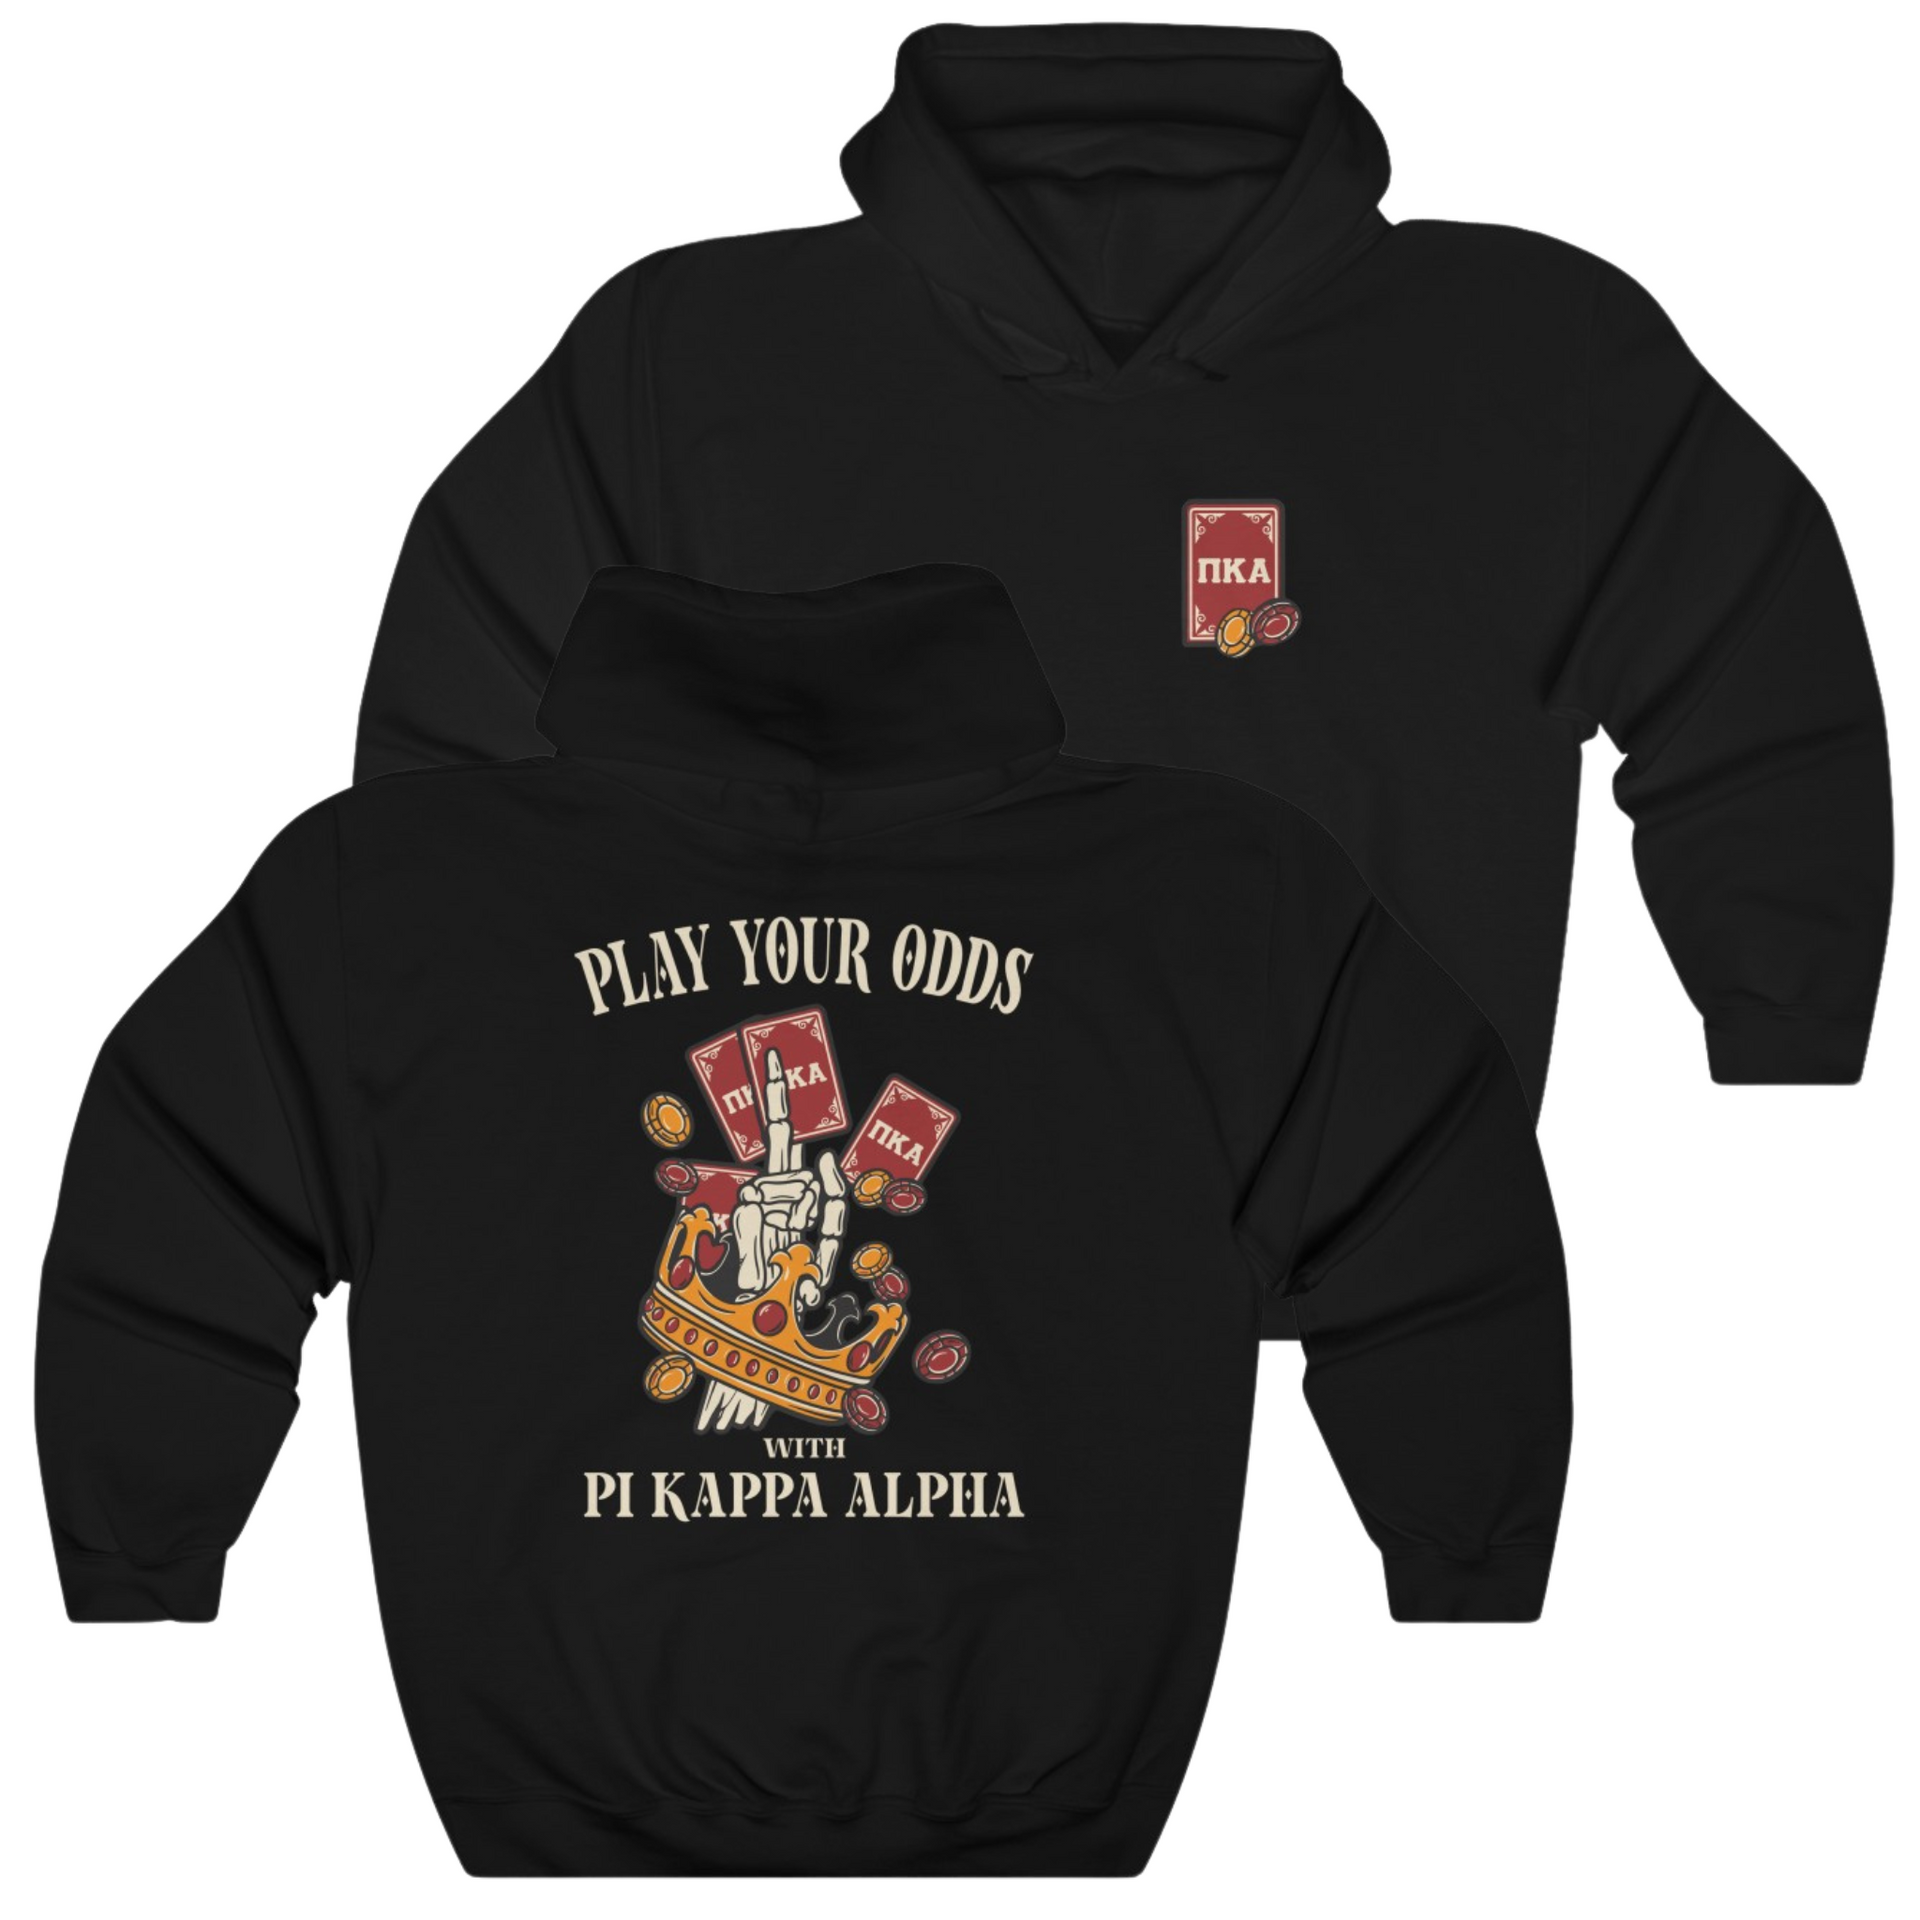 Black Pi Kappa Alpha Graphic Hoodie | Play Your Odds | Pi kappa alpha fraternity shirt